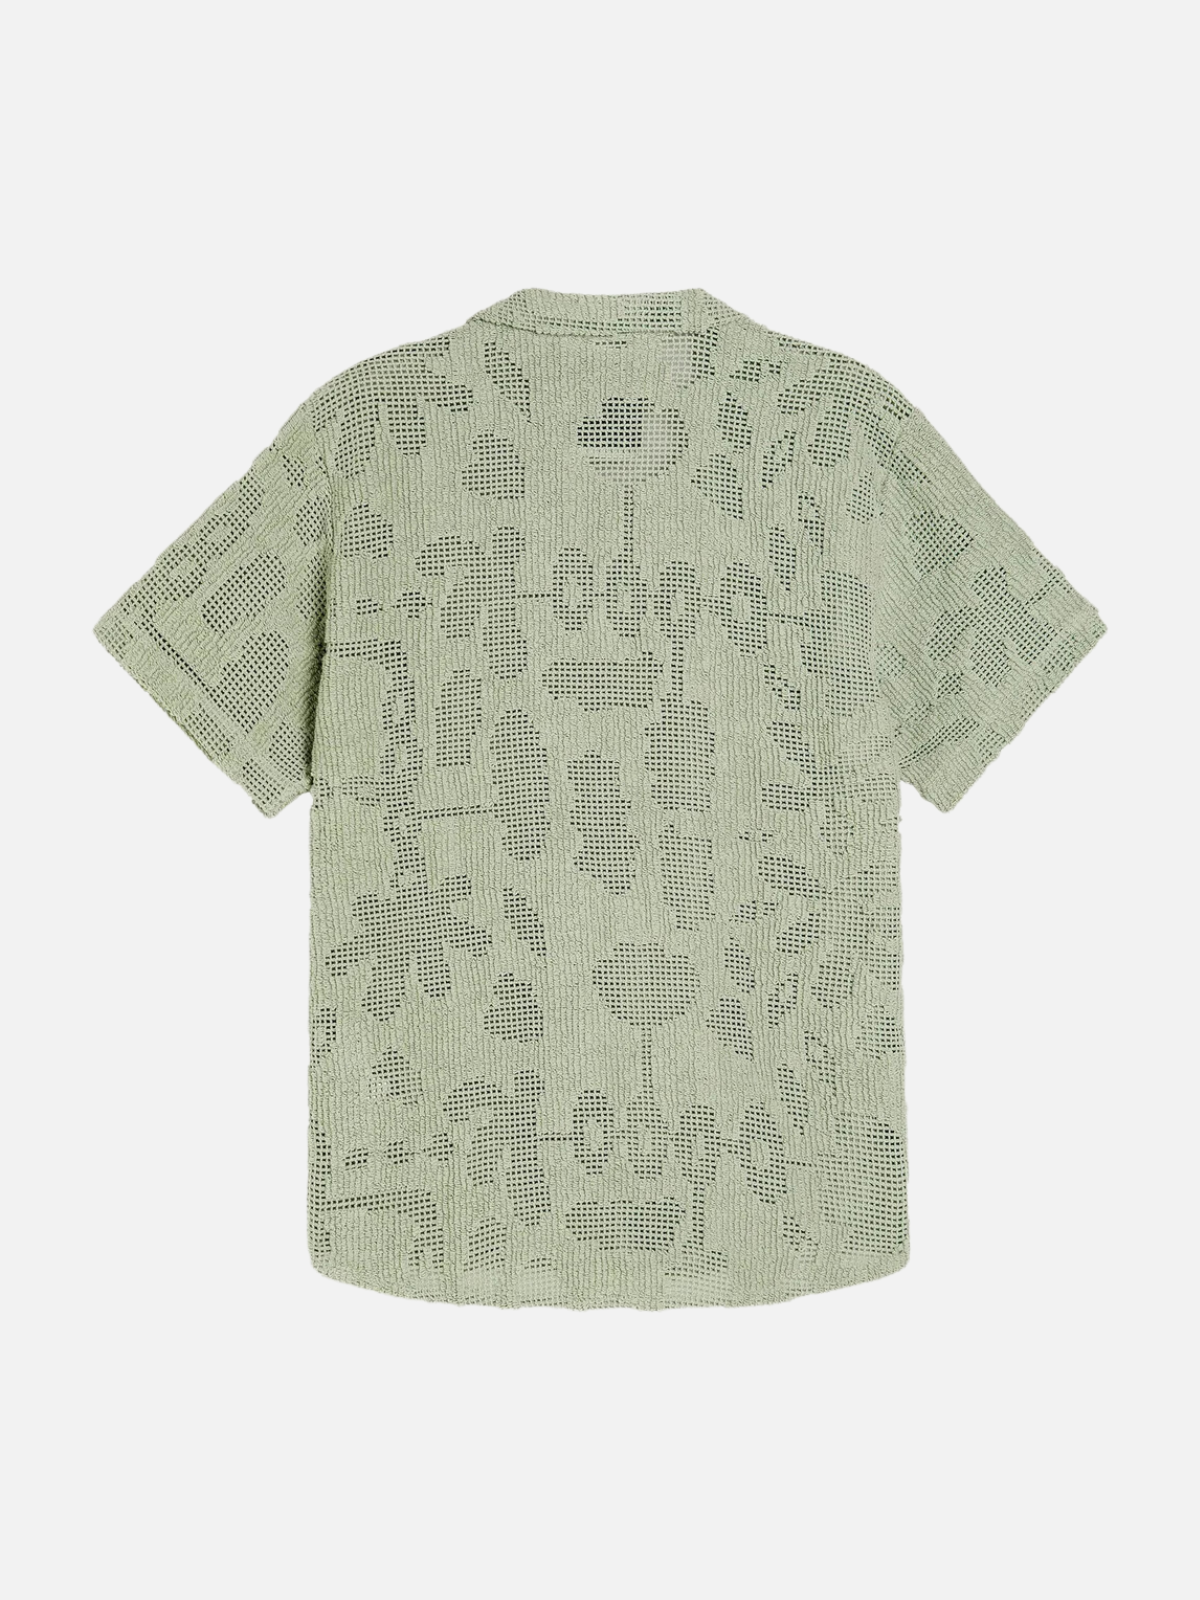 oas galbanum cuba chrochet shirt cotton polyester blend seafoam green ss short sleeve button up kempt athens ga georgia men's clothing store